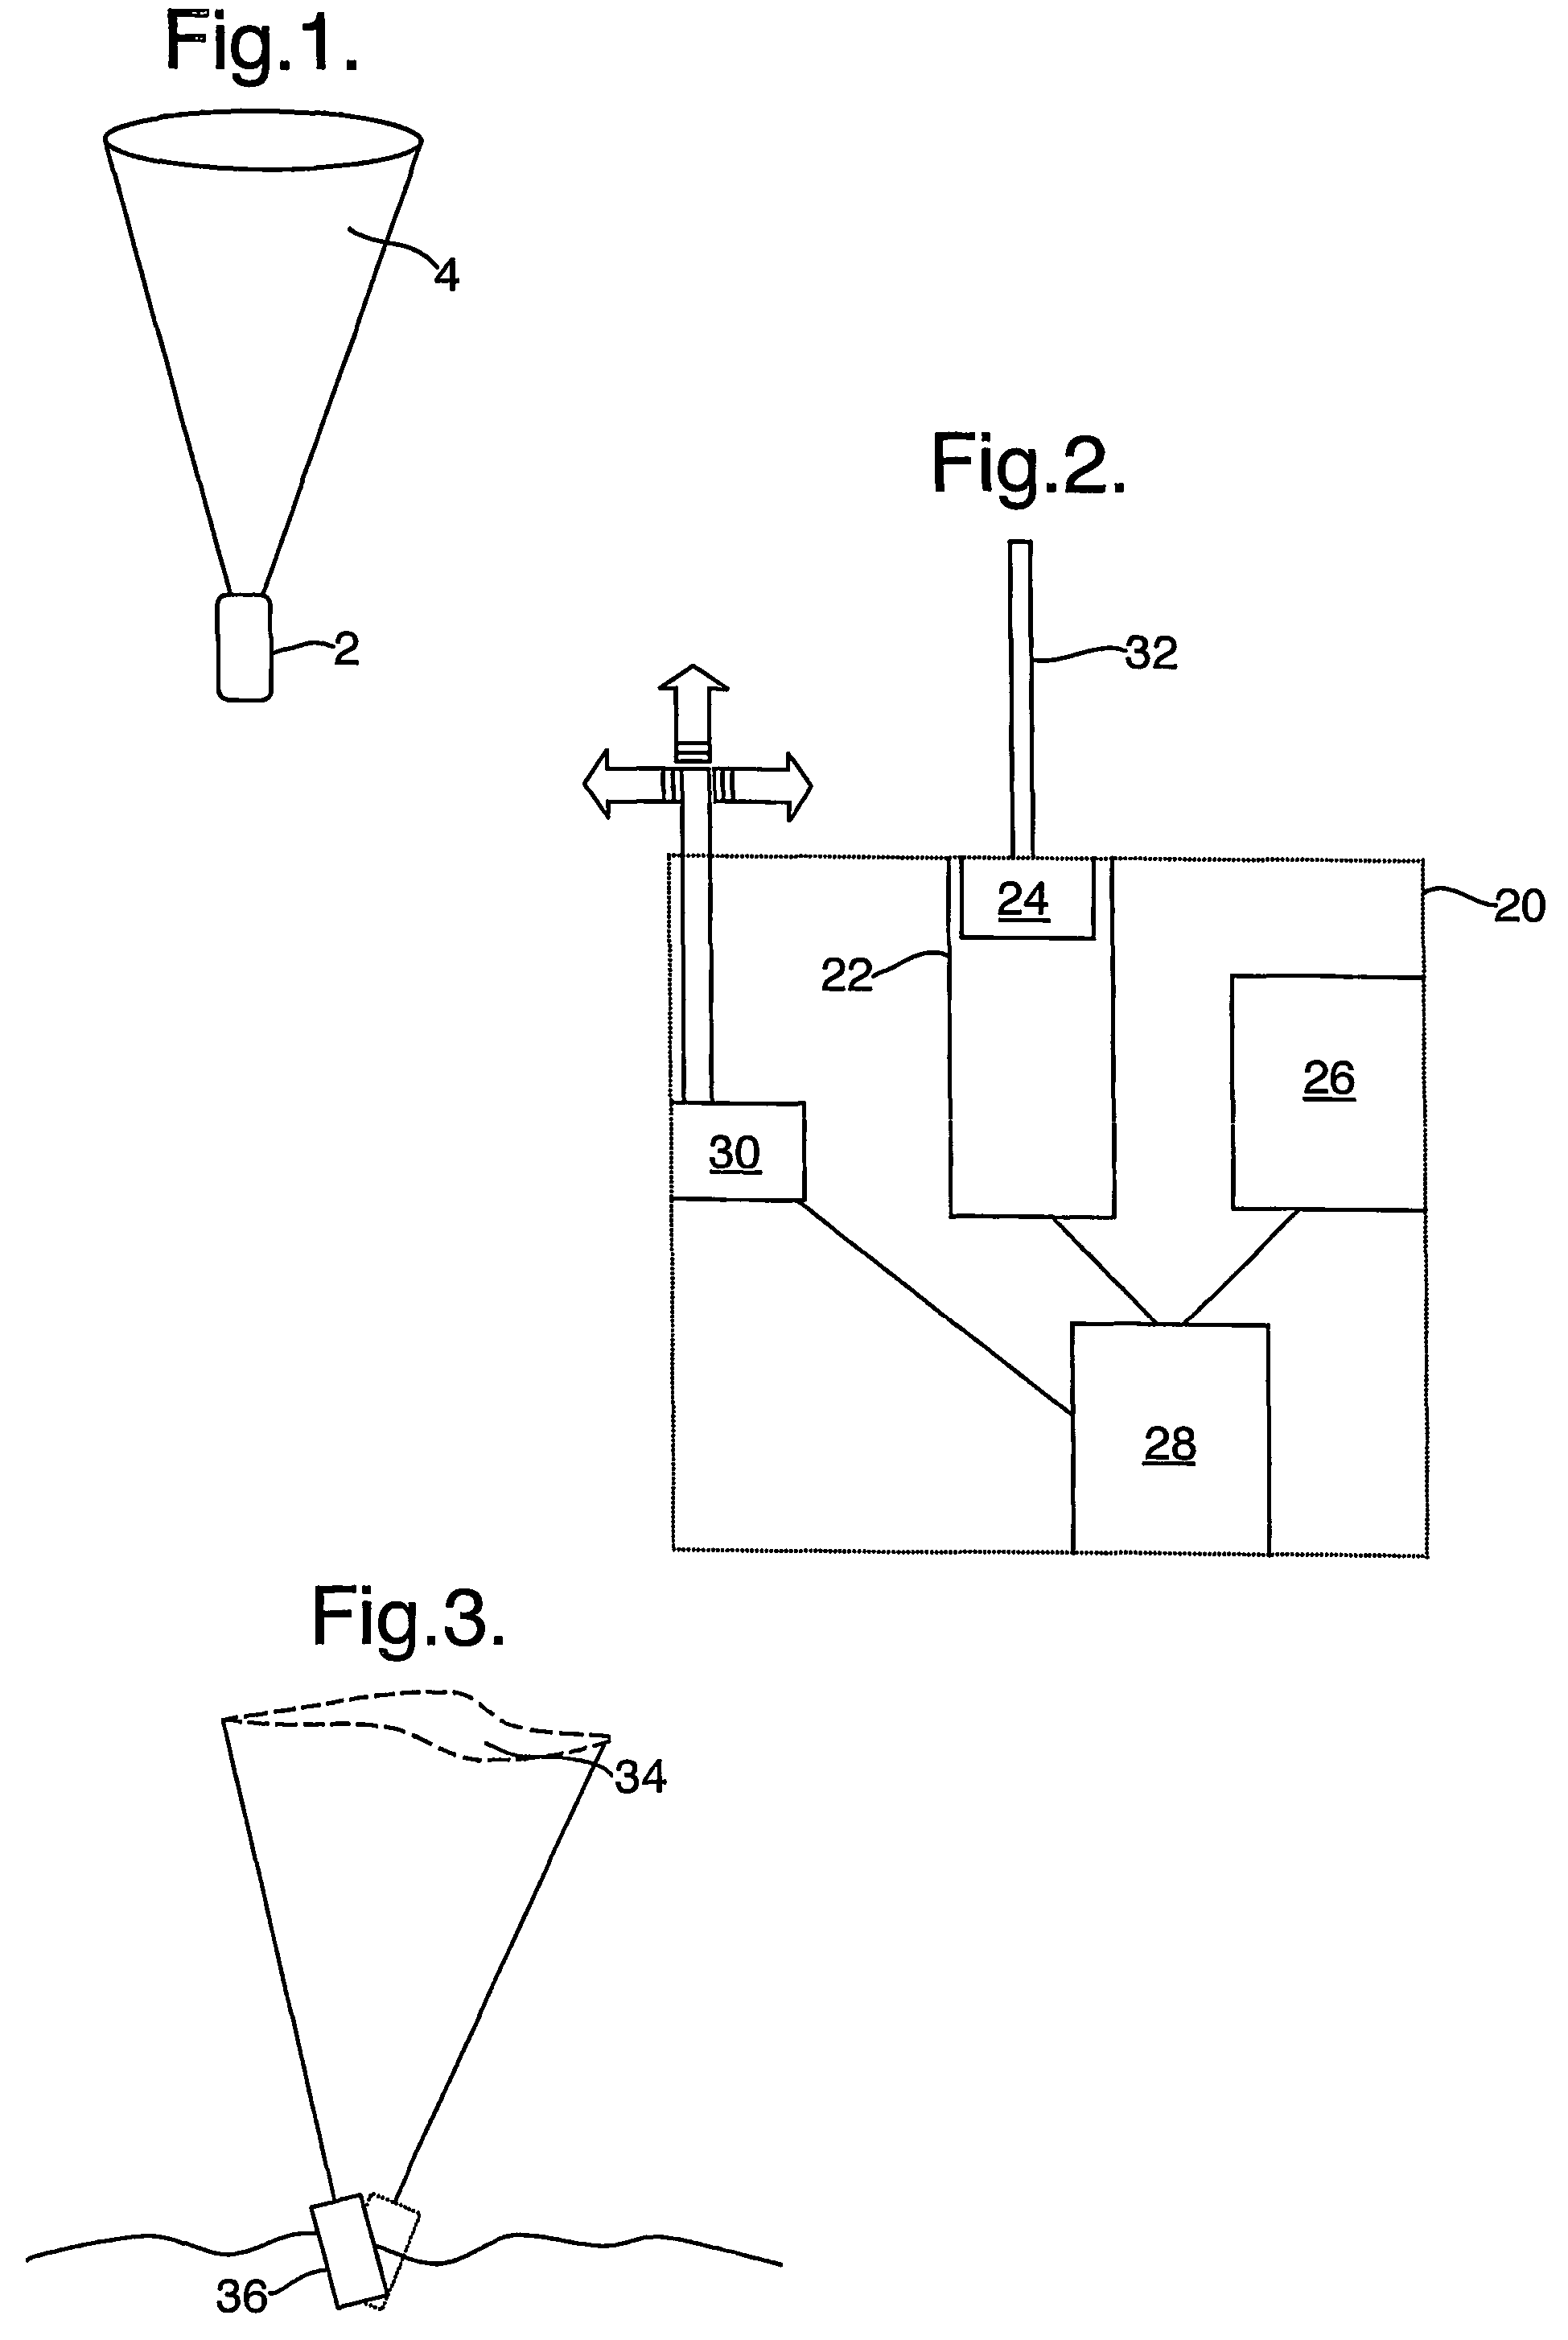 Wind speed measurement apparatus and method